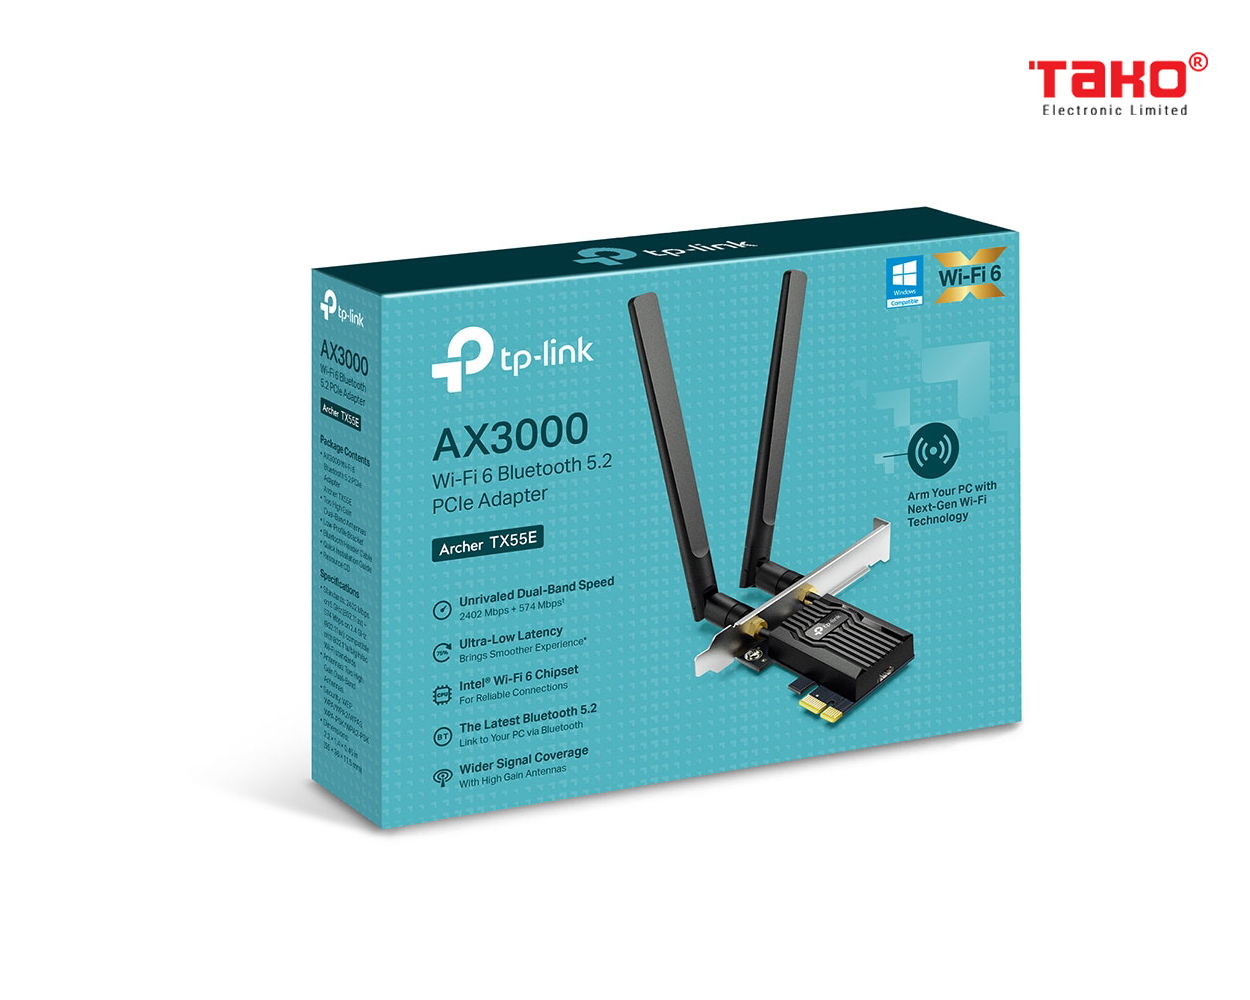 Archer TX55E AX3000 Wi-Fi 6 Bluetooth 5.2 PCIe Adapter 4